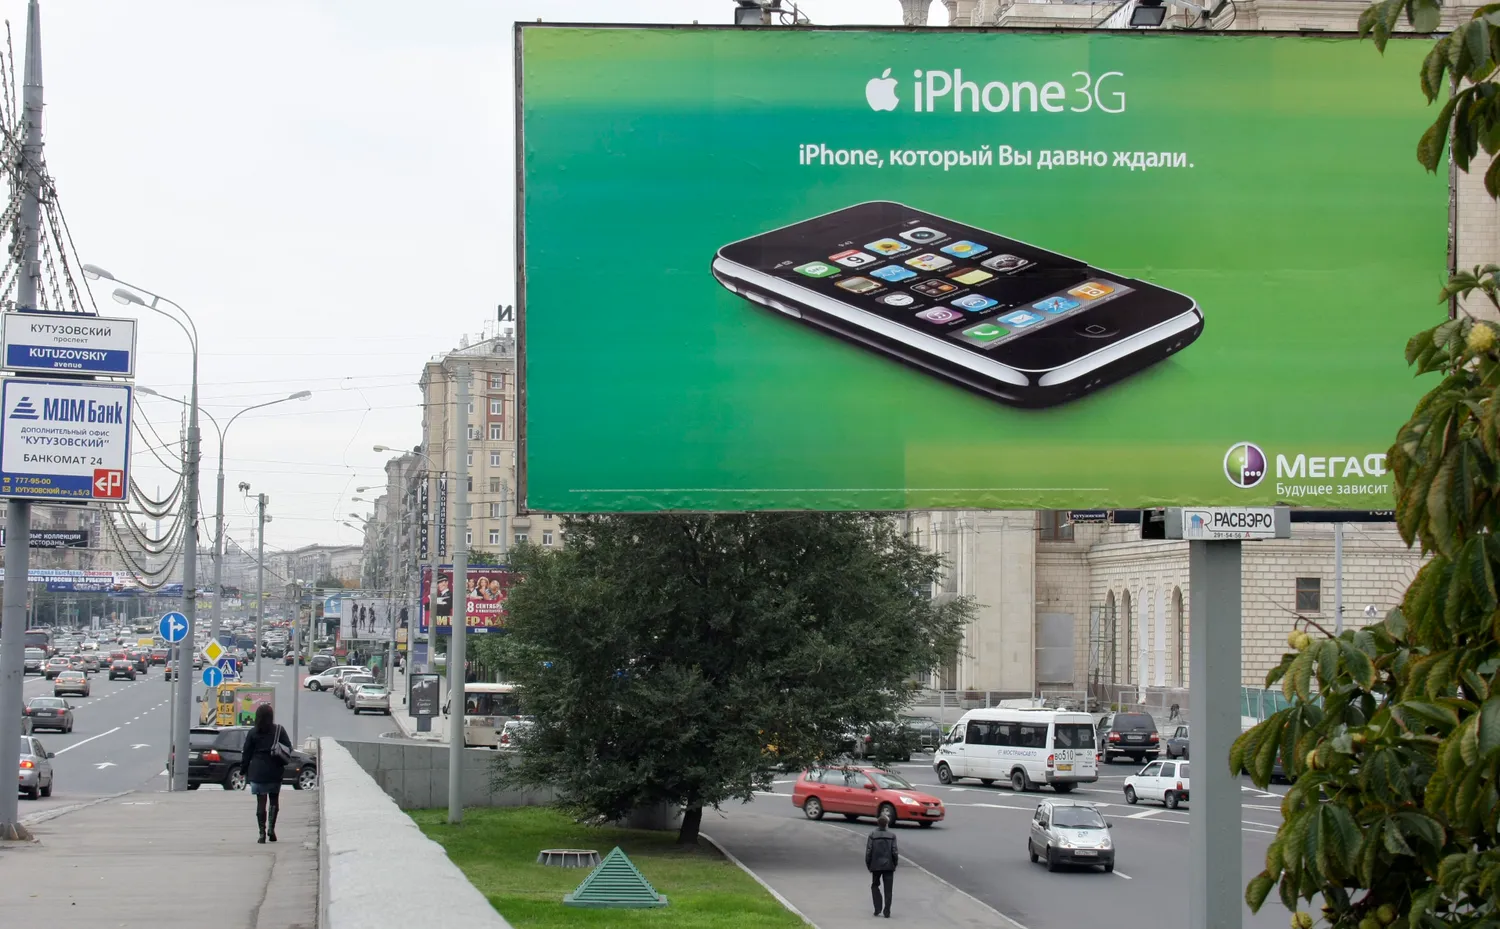 "Мегафон" удивил конкурентов условиями продаж iPhone 3G